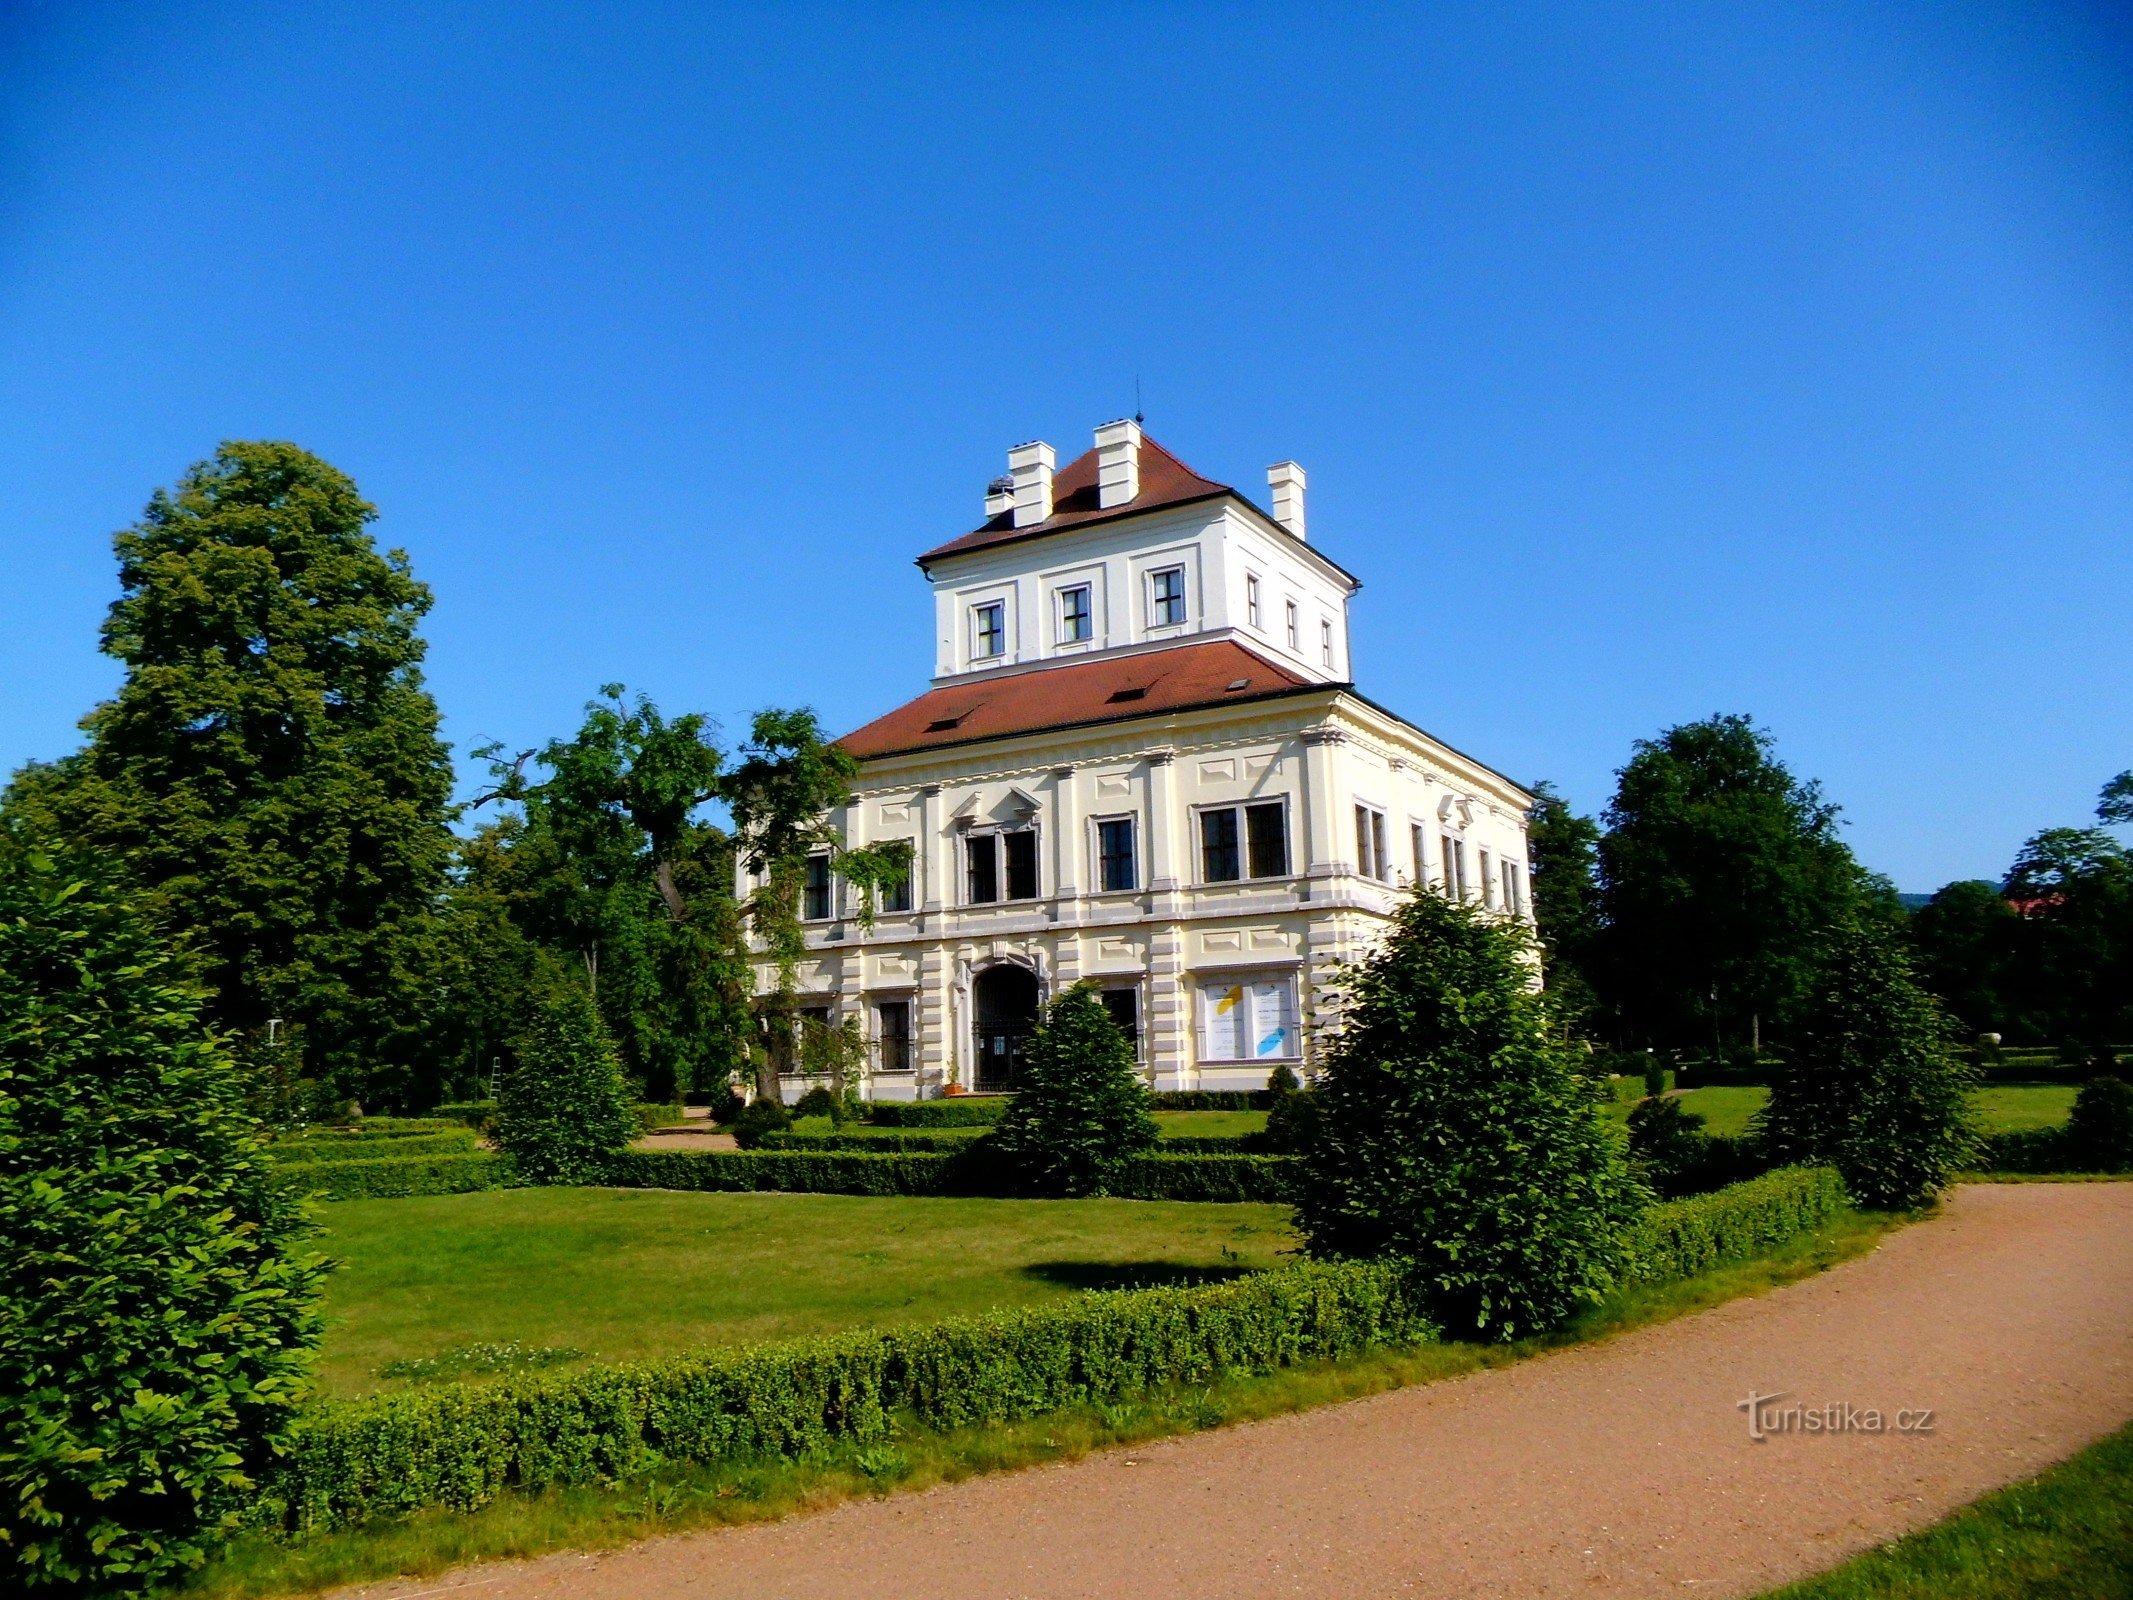 Spaziergang durch den Schlosspark Ostrov nad Ohří